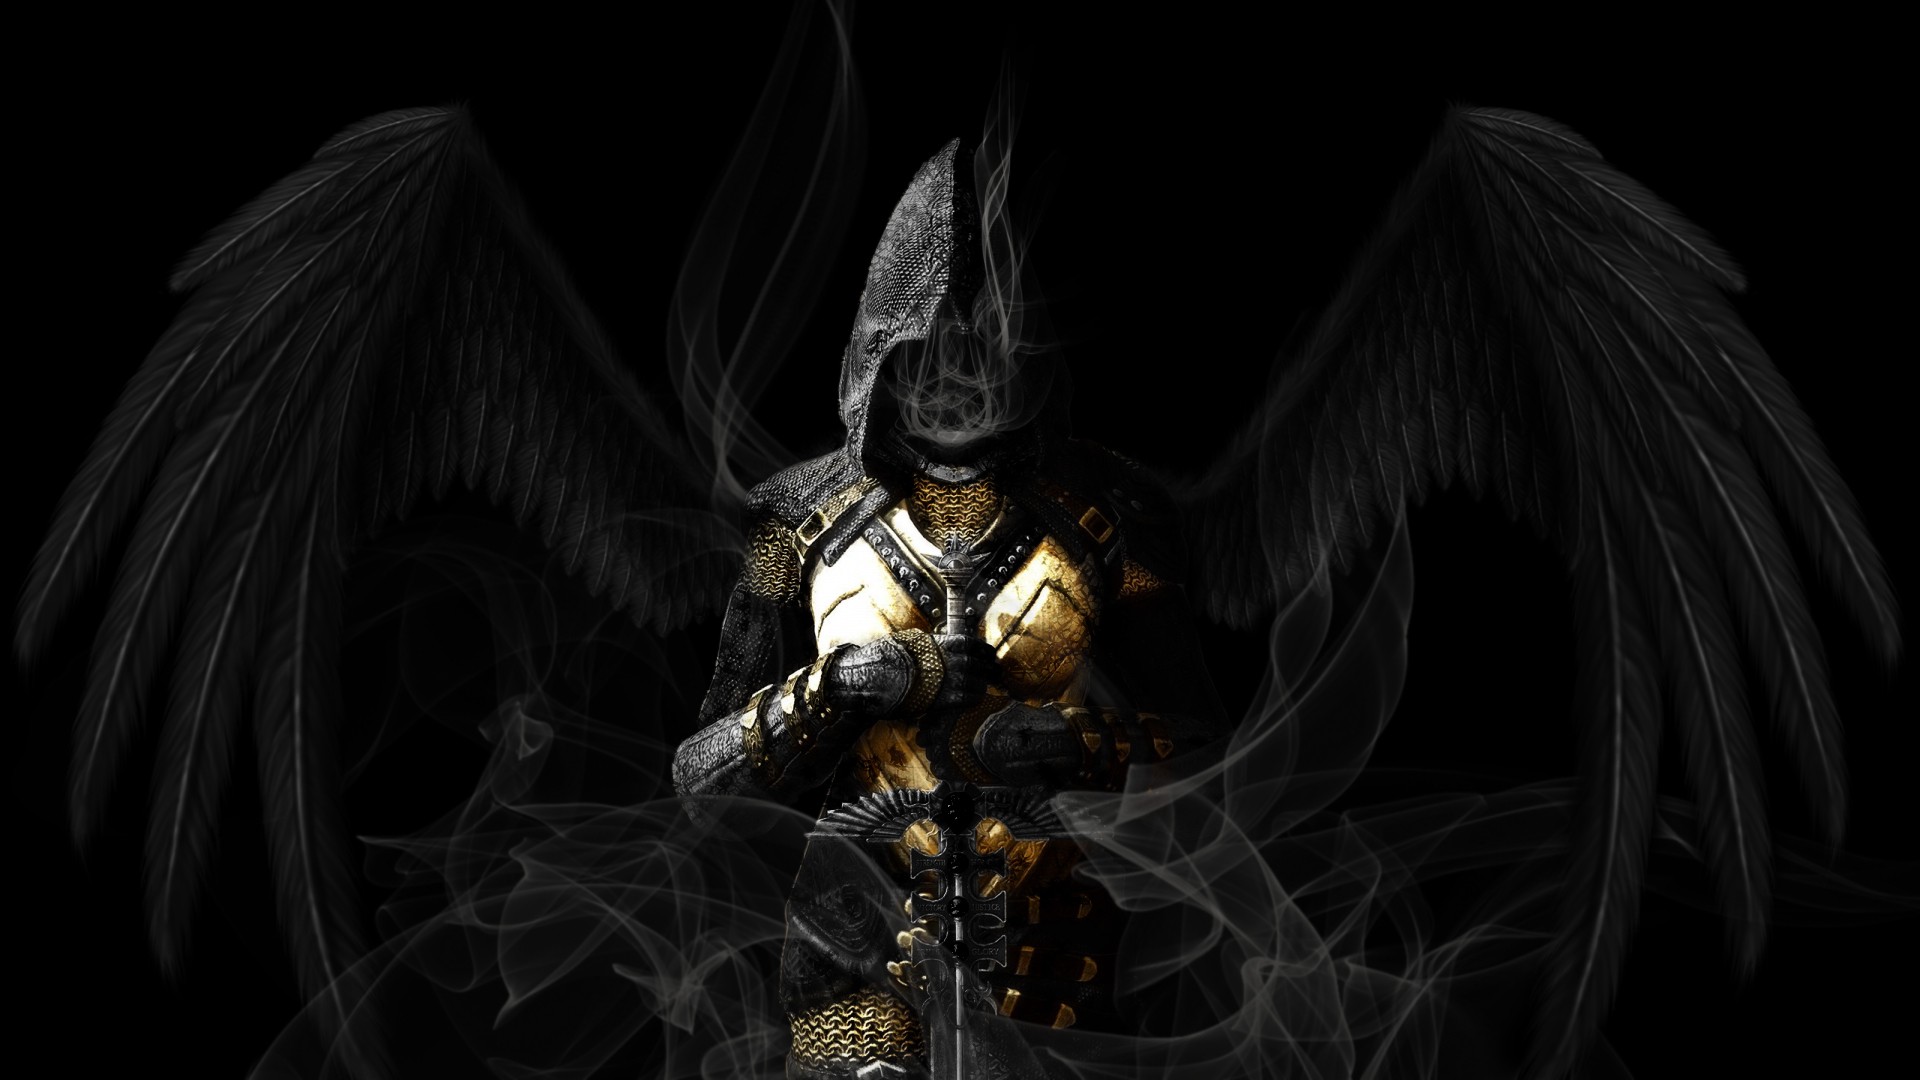 Wings Black Sword Gothic Dark Reaper Grim Angels Wallpaper Background